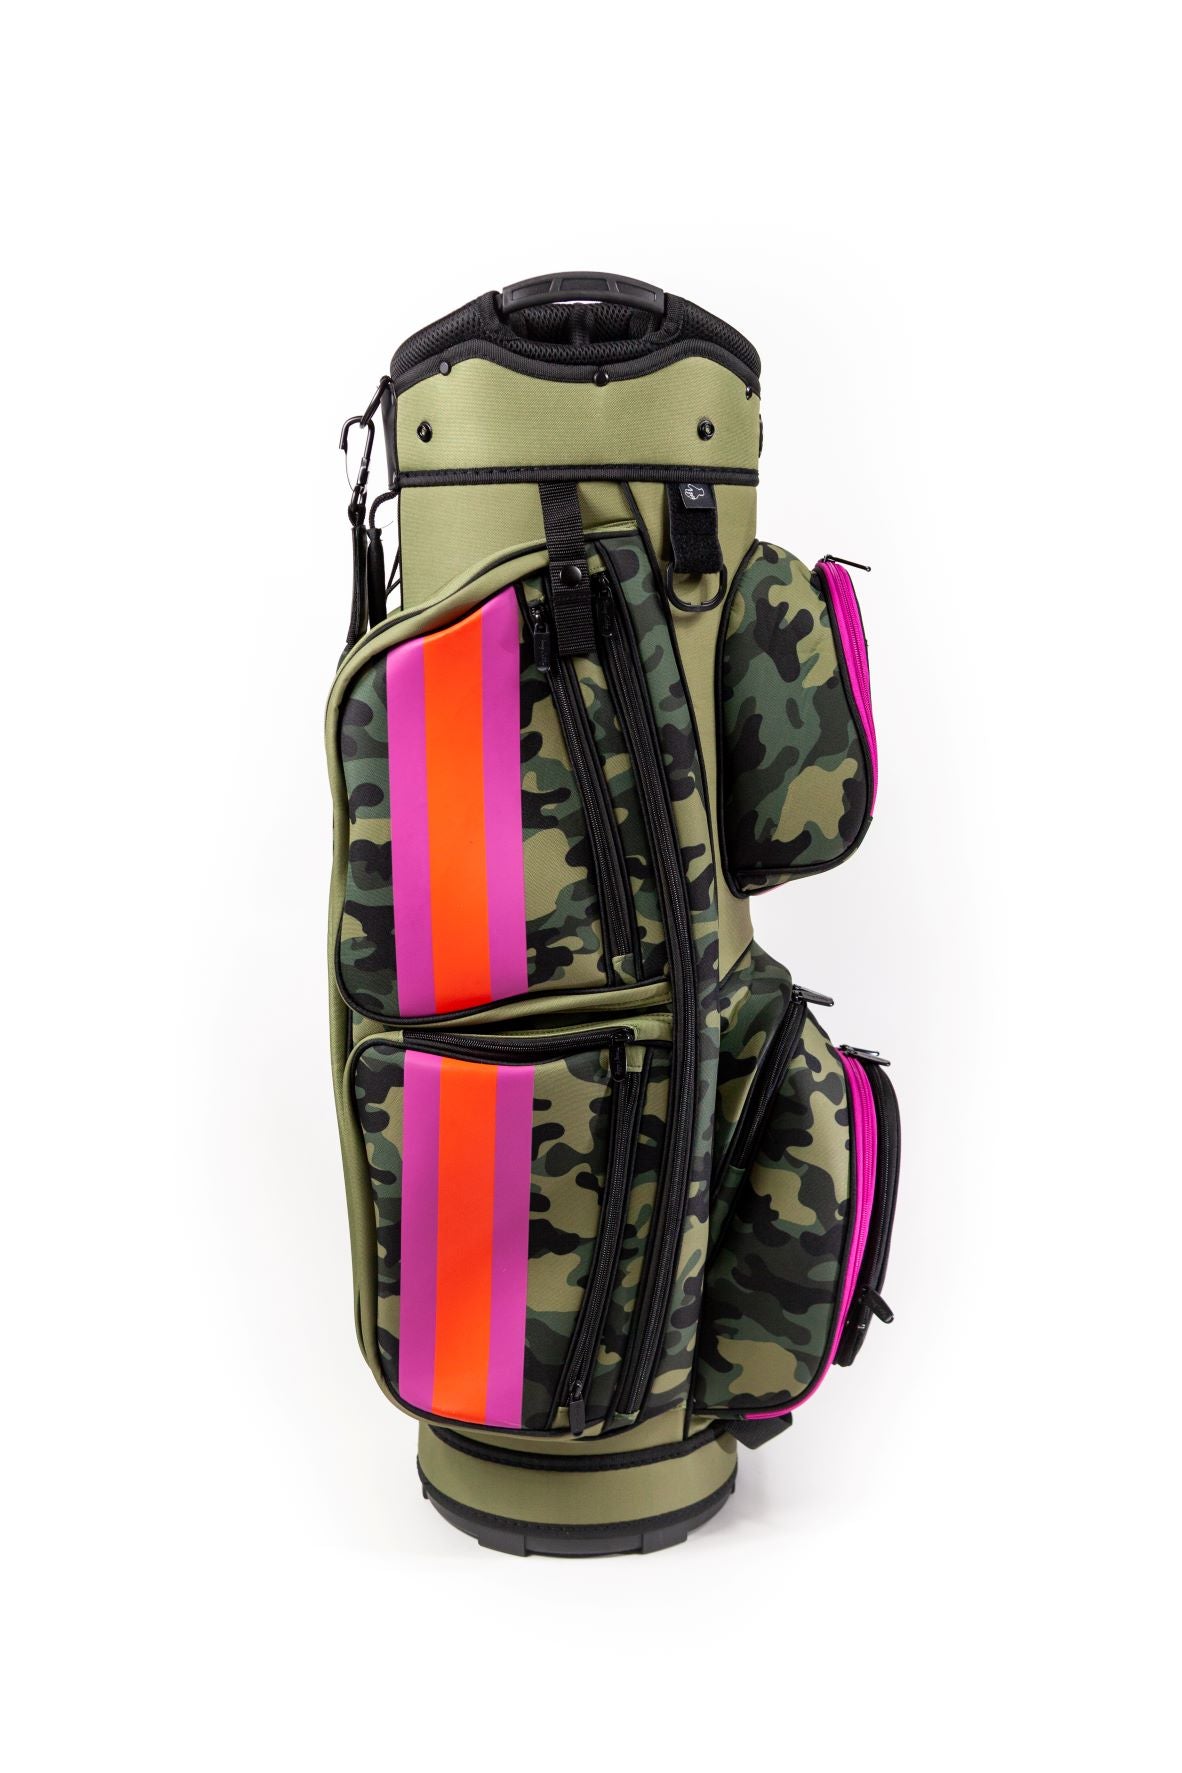 Sassy Caddy | Women's Cart Bag | Adelaide Designer Golf Bag | Light-Weight  | Yellow & Black